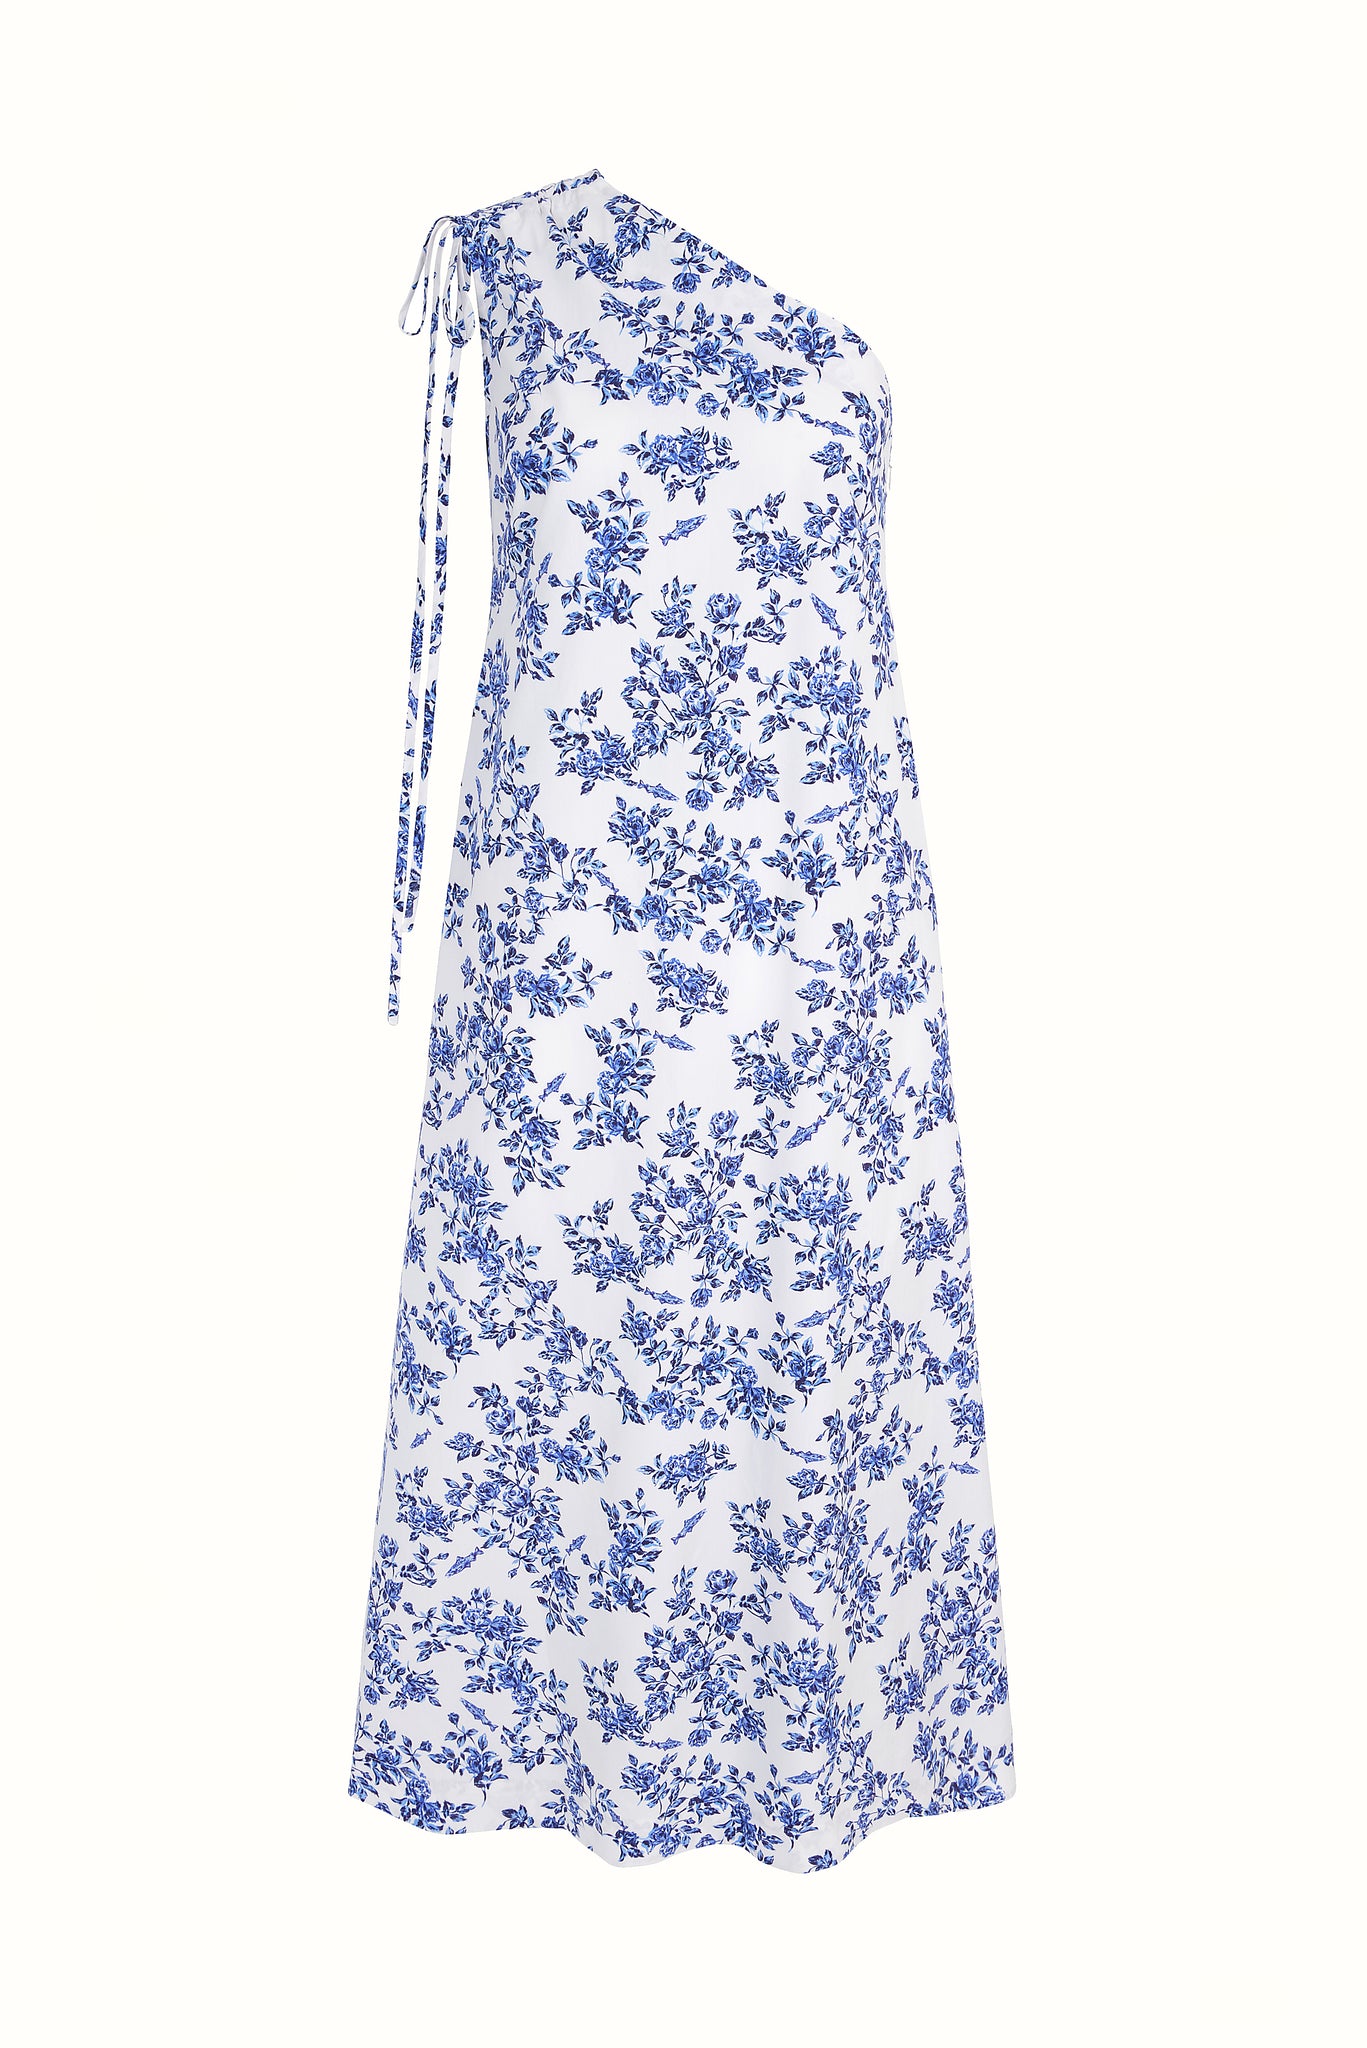 Solace Single Shoulder Dress in Blue Floral Print Cotton | Emilia Wickstead X Passalacqua